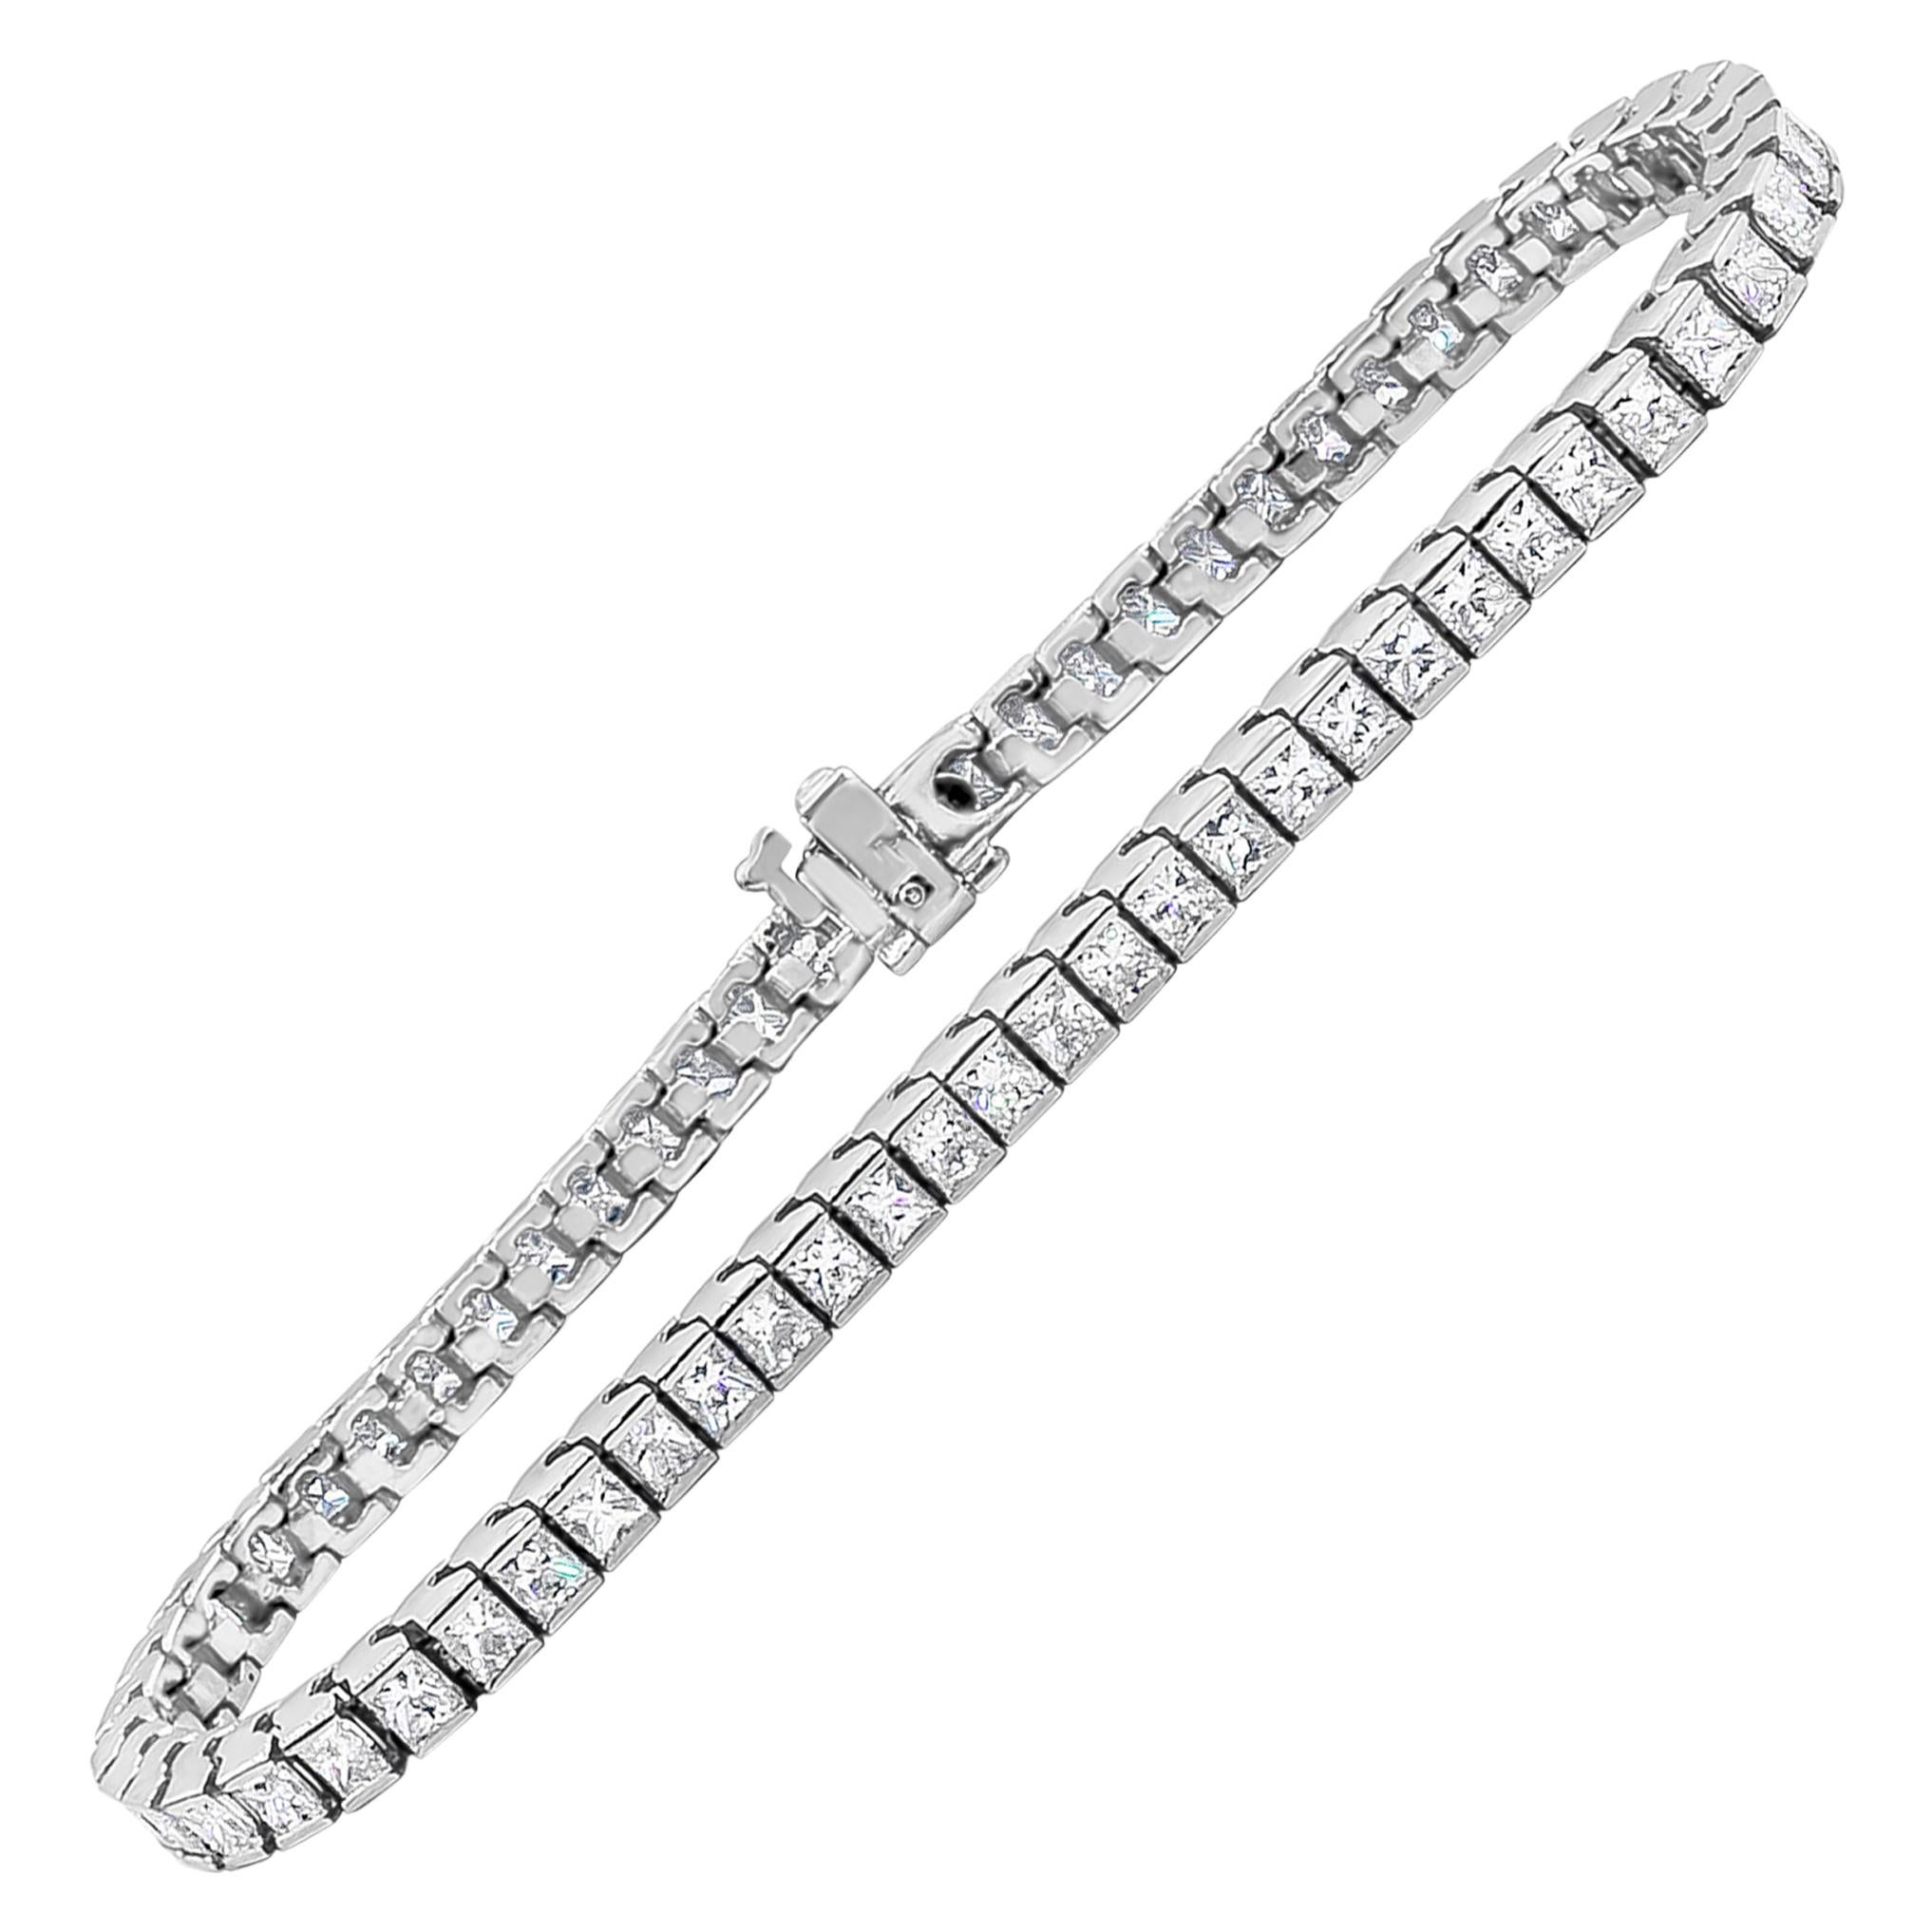 Roman Malakov 6.20 Carat Princess Cut Diamond Tennis Bracelet in Platinum